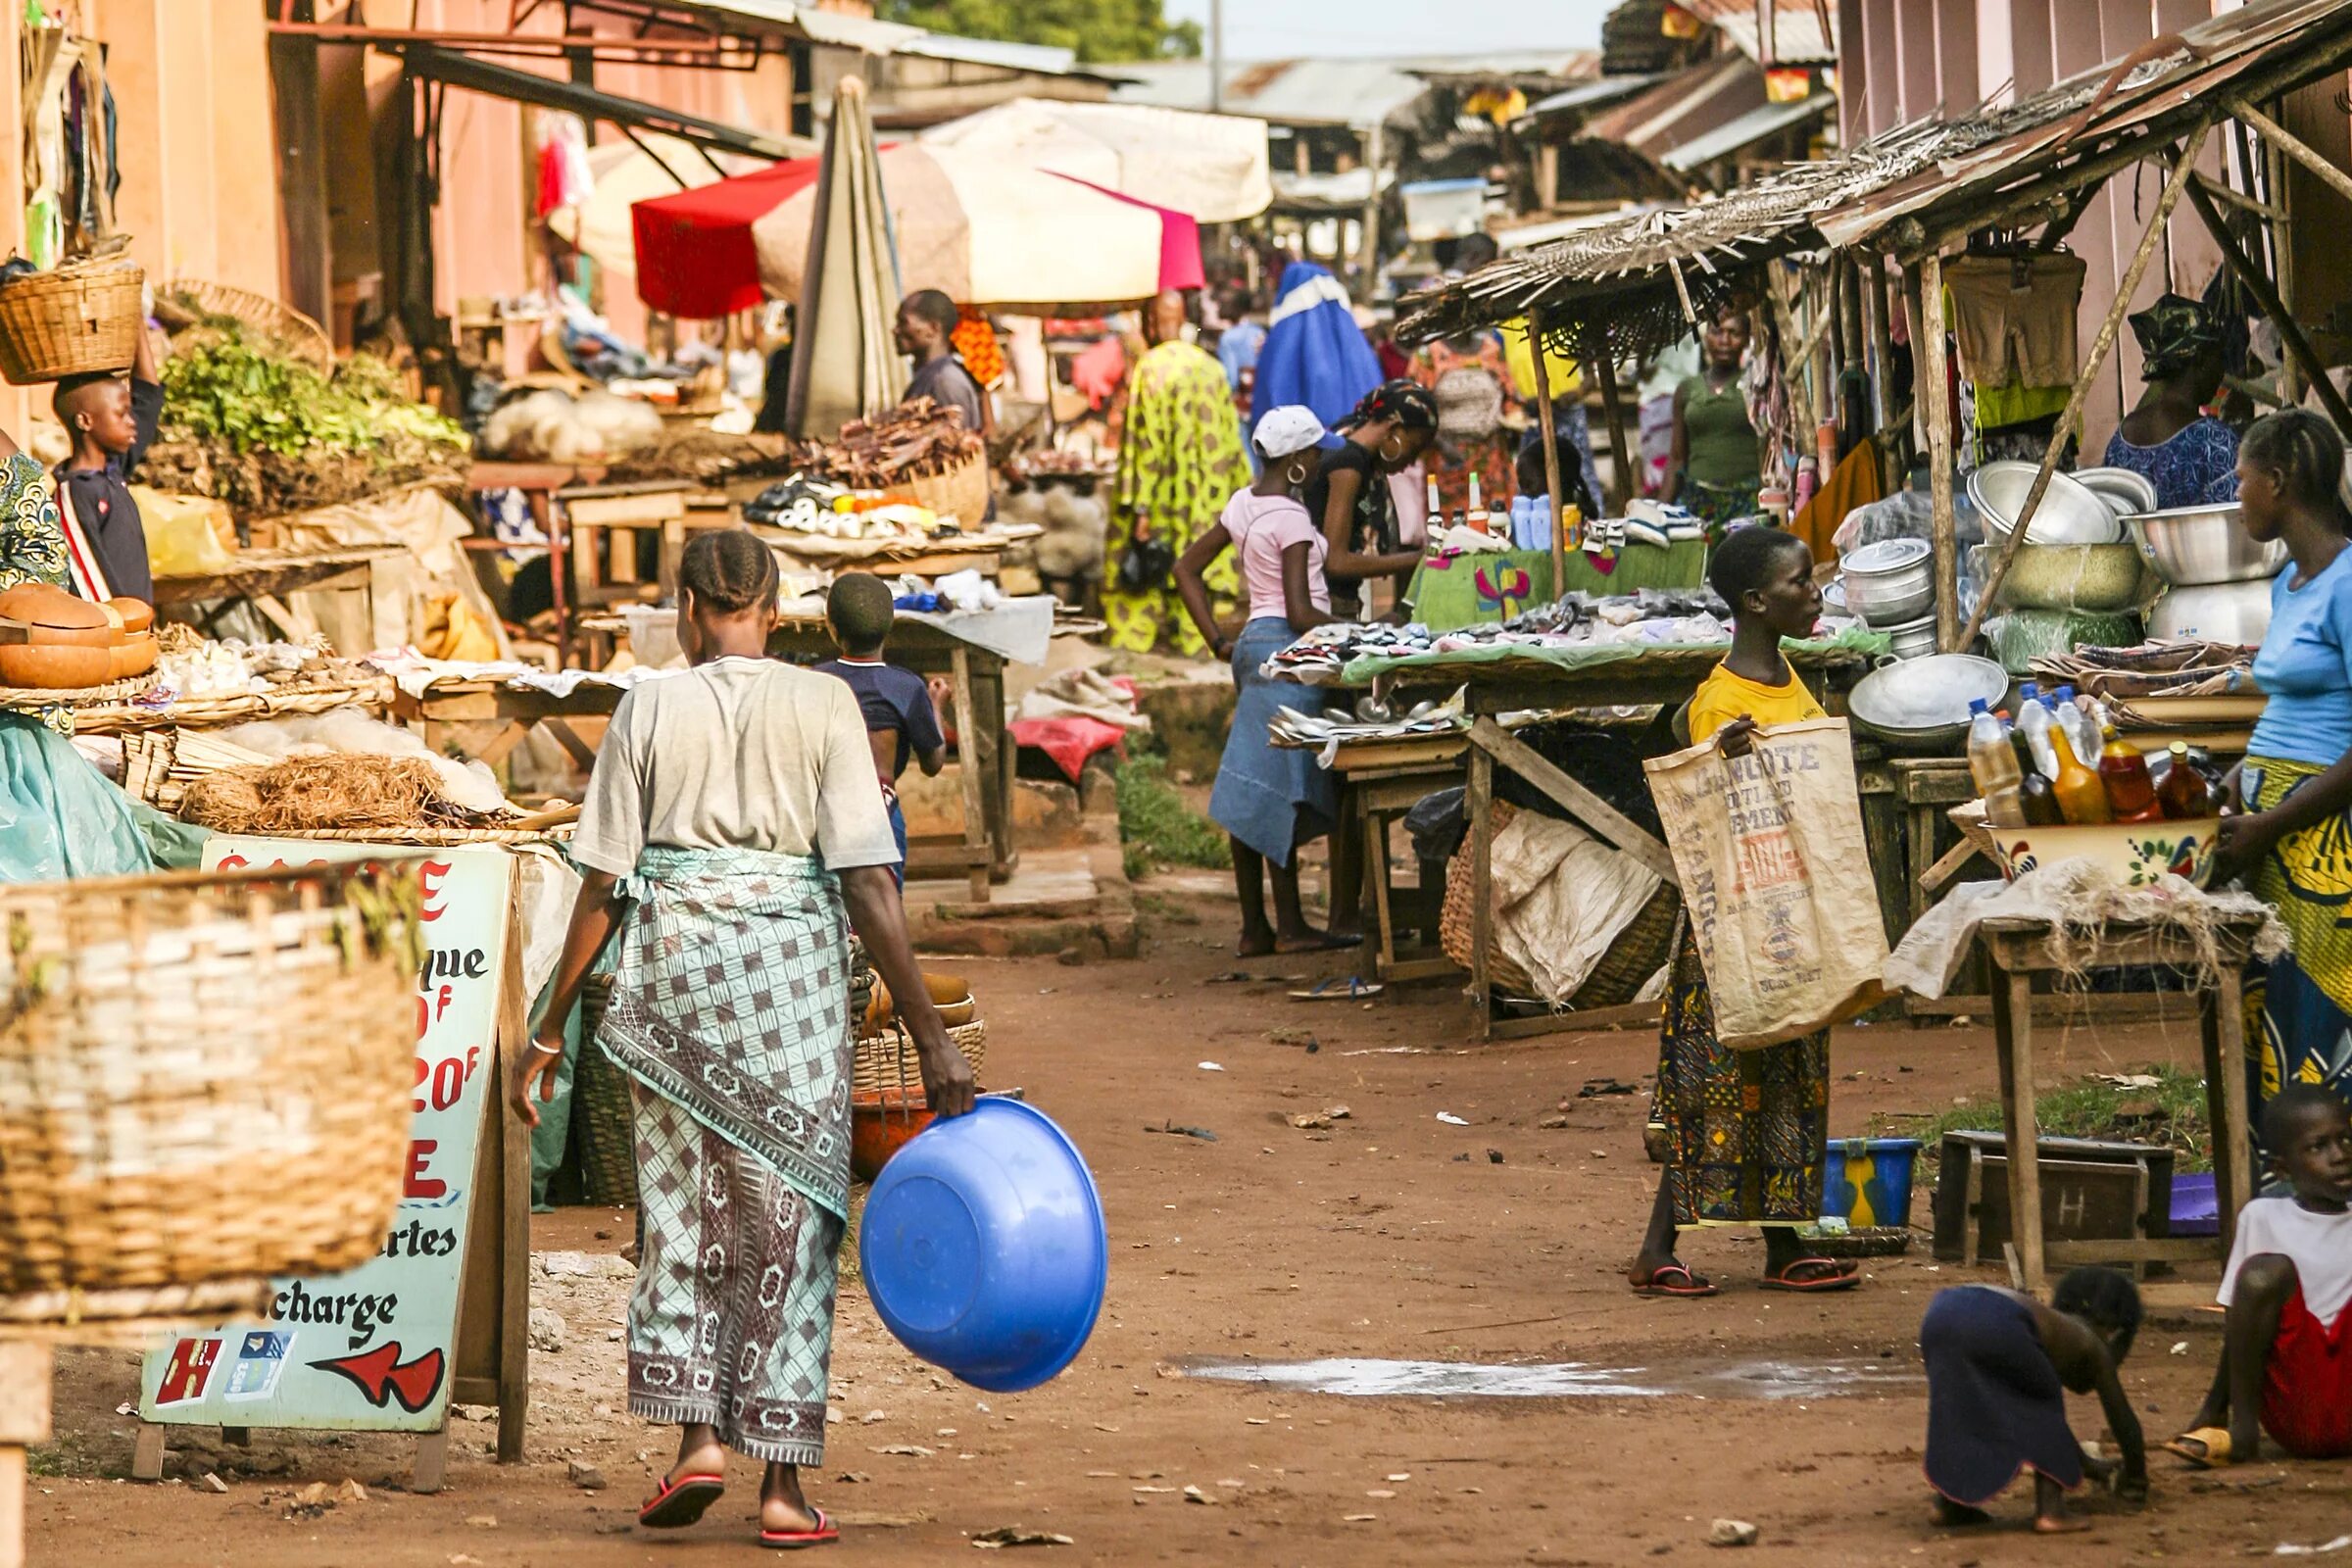 Рынок в Африке. Африка базар. Торговля в Африке. Африканский базар. Market village